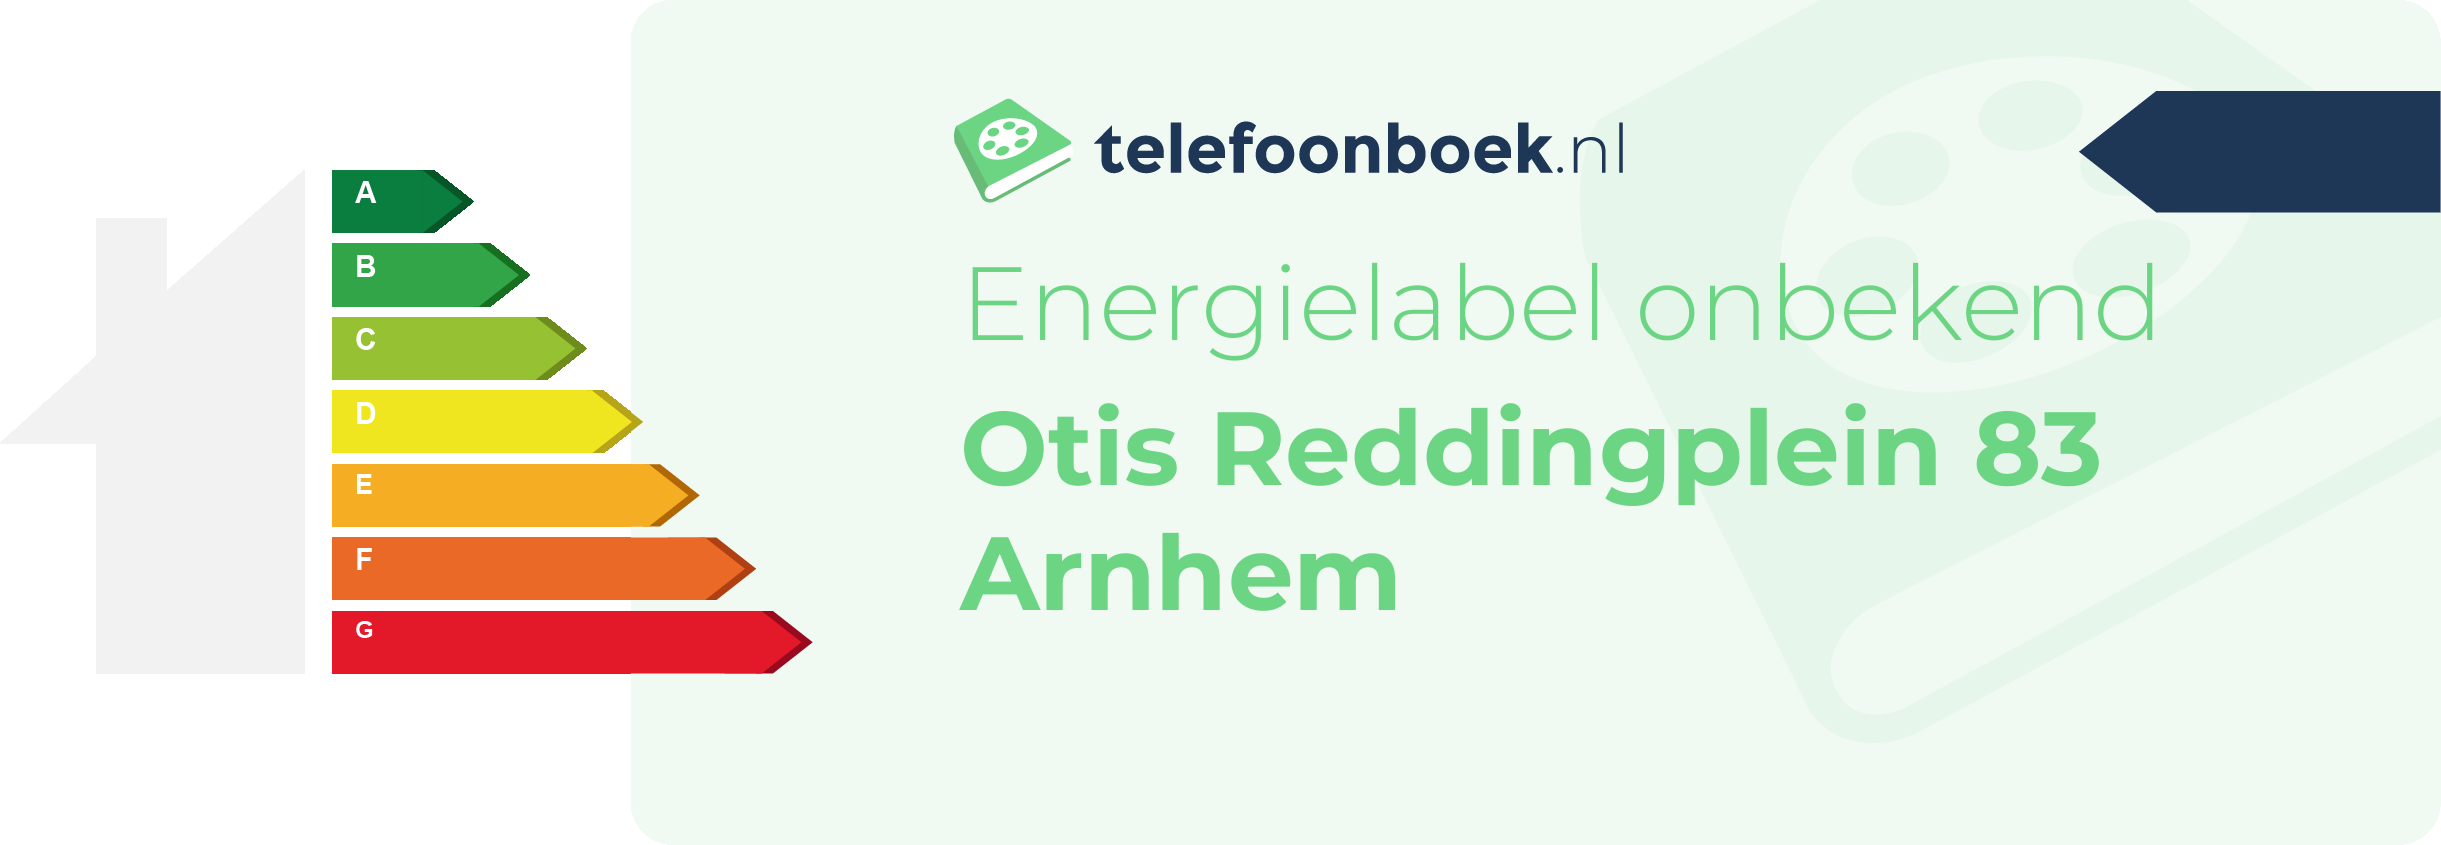 Energielabel Otis Reddingplein 83 Arnhem